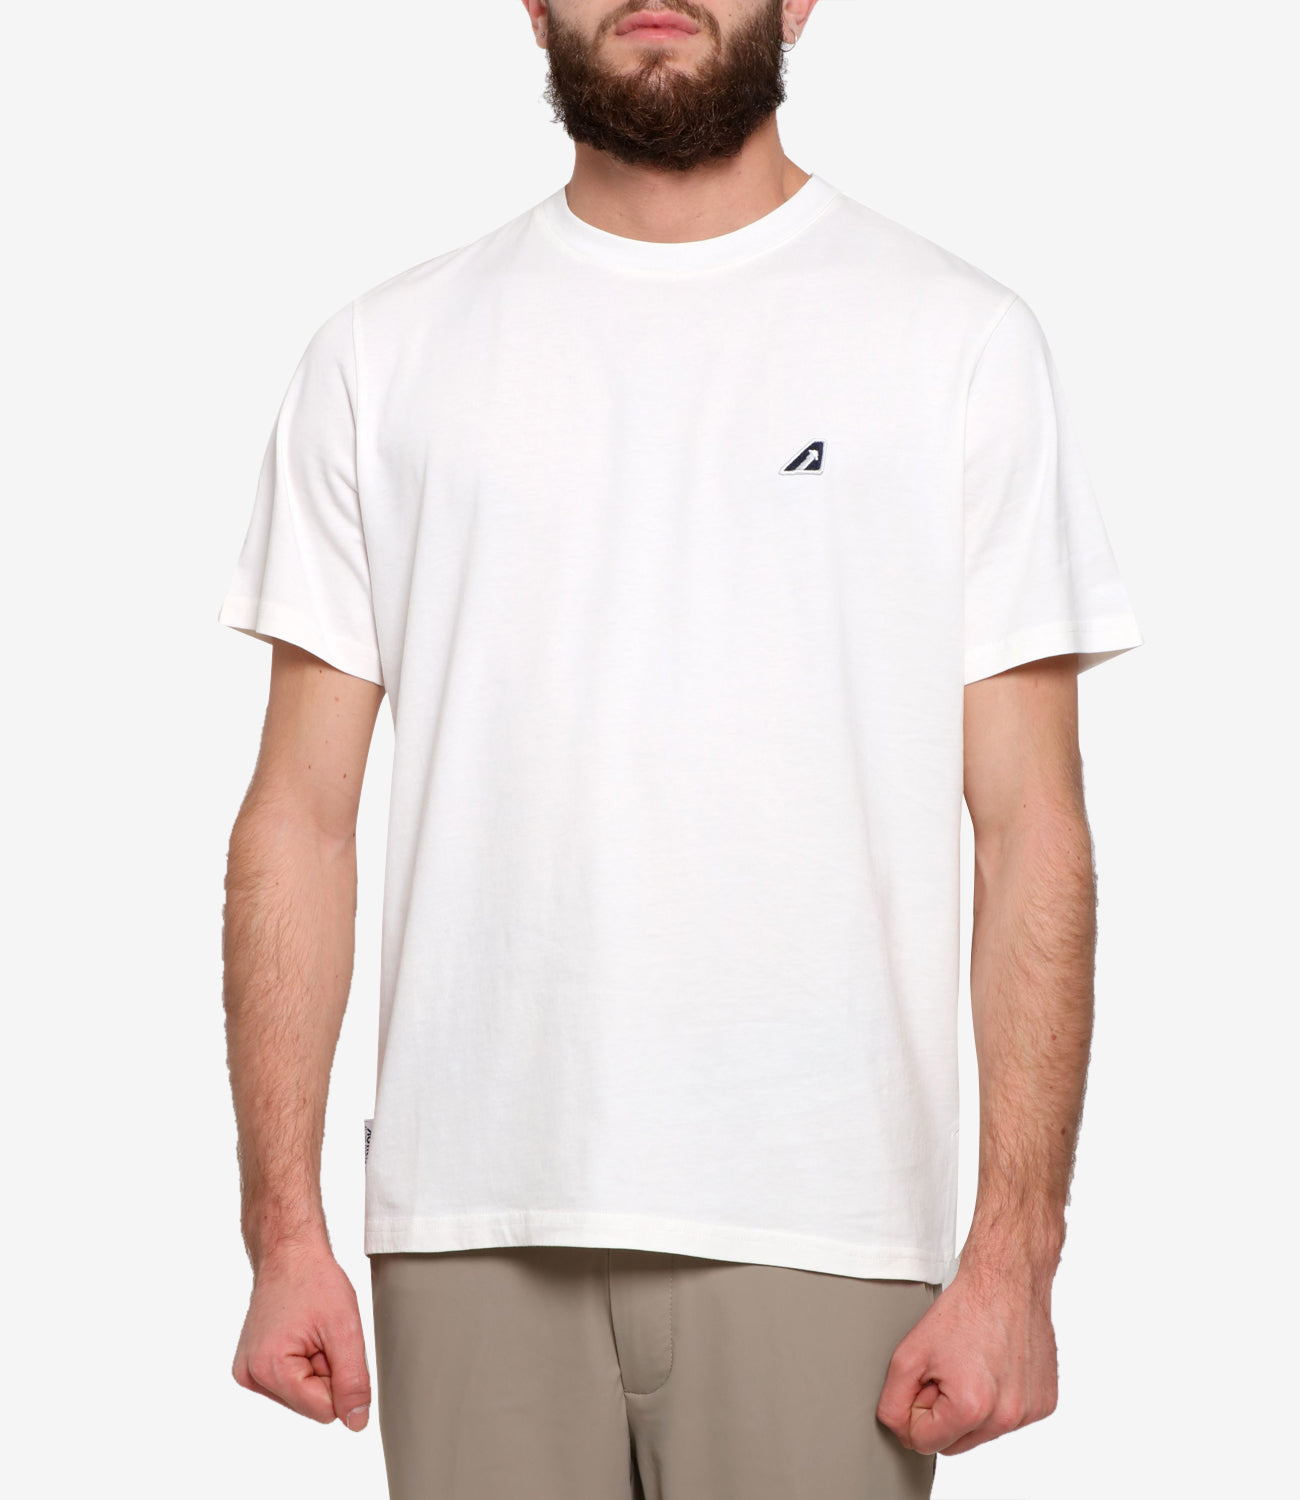 Autry | White T-Shirt